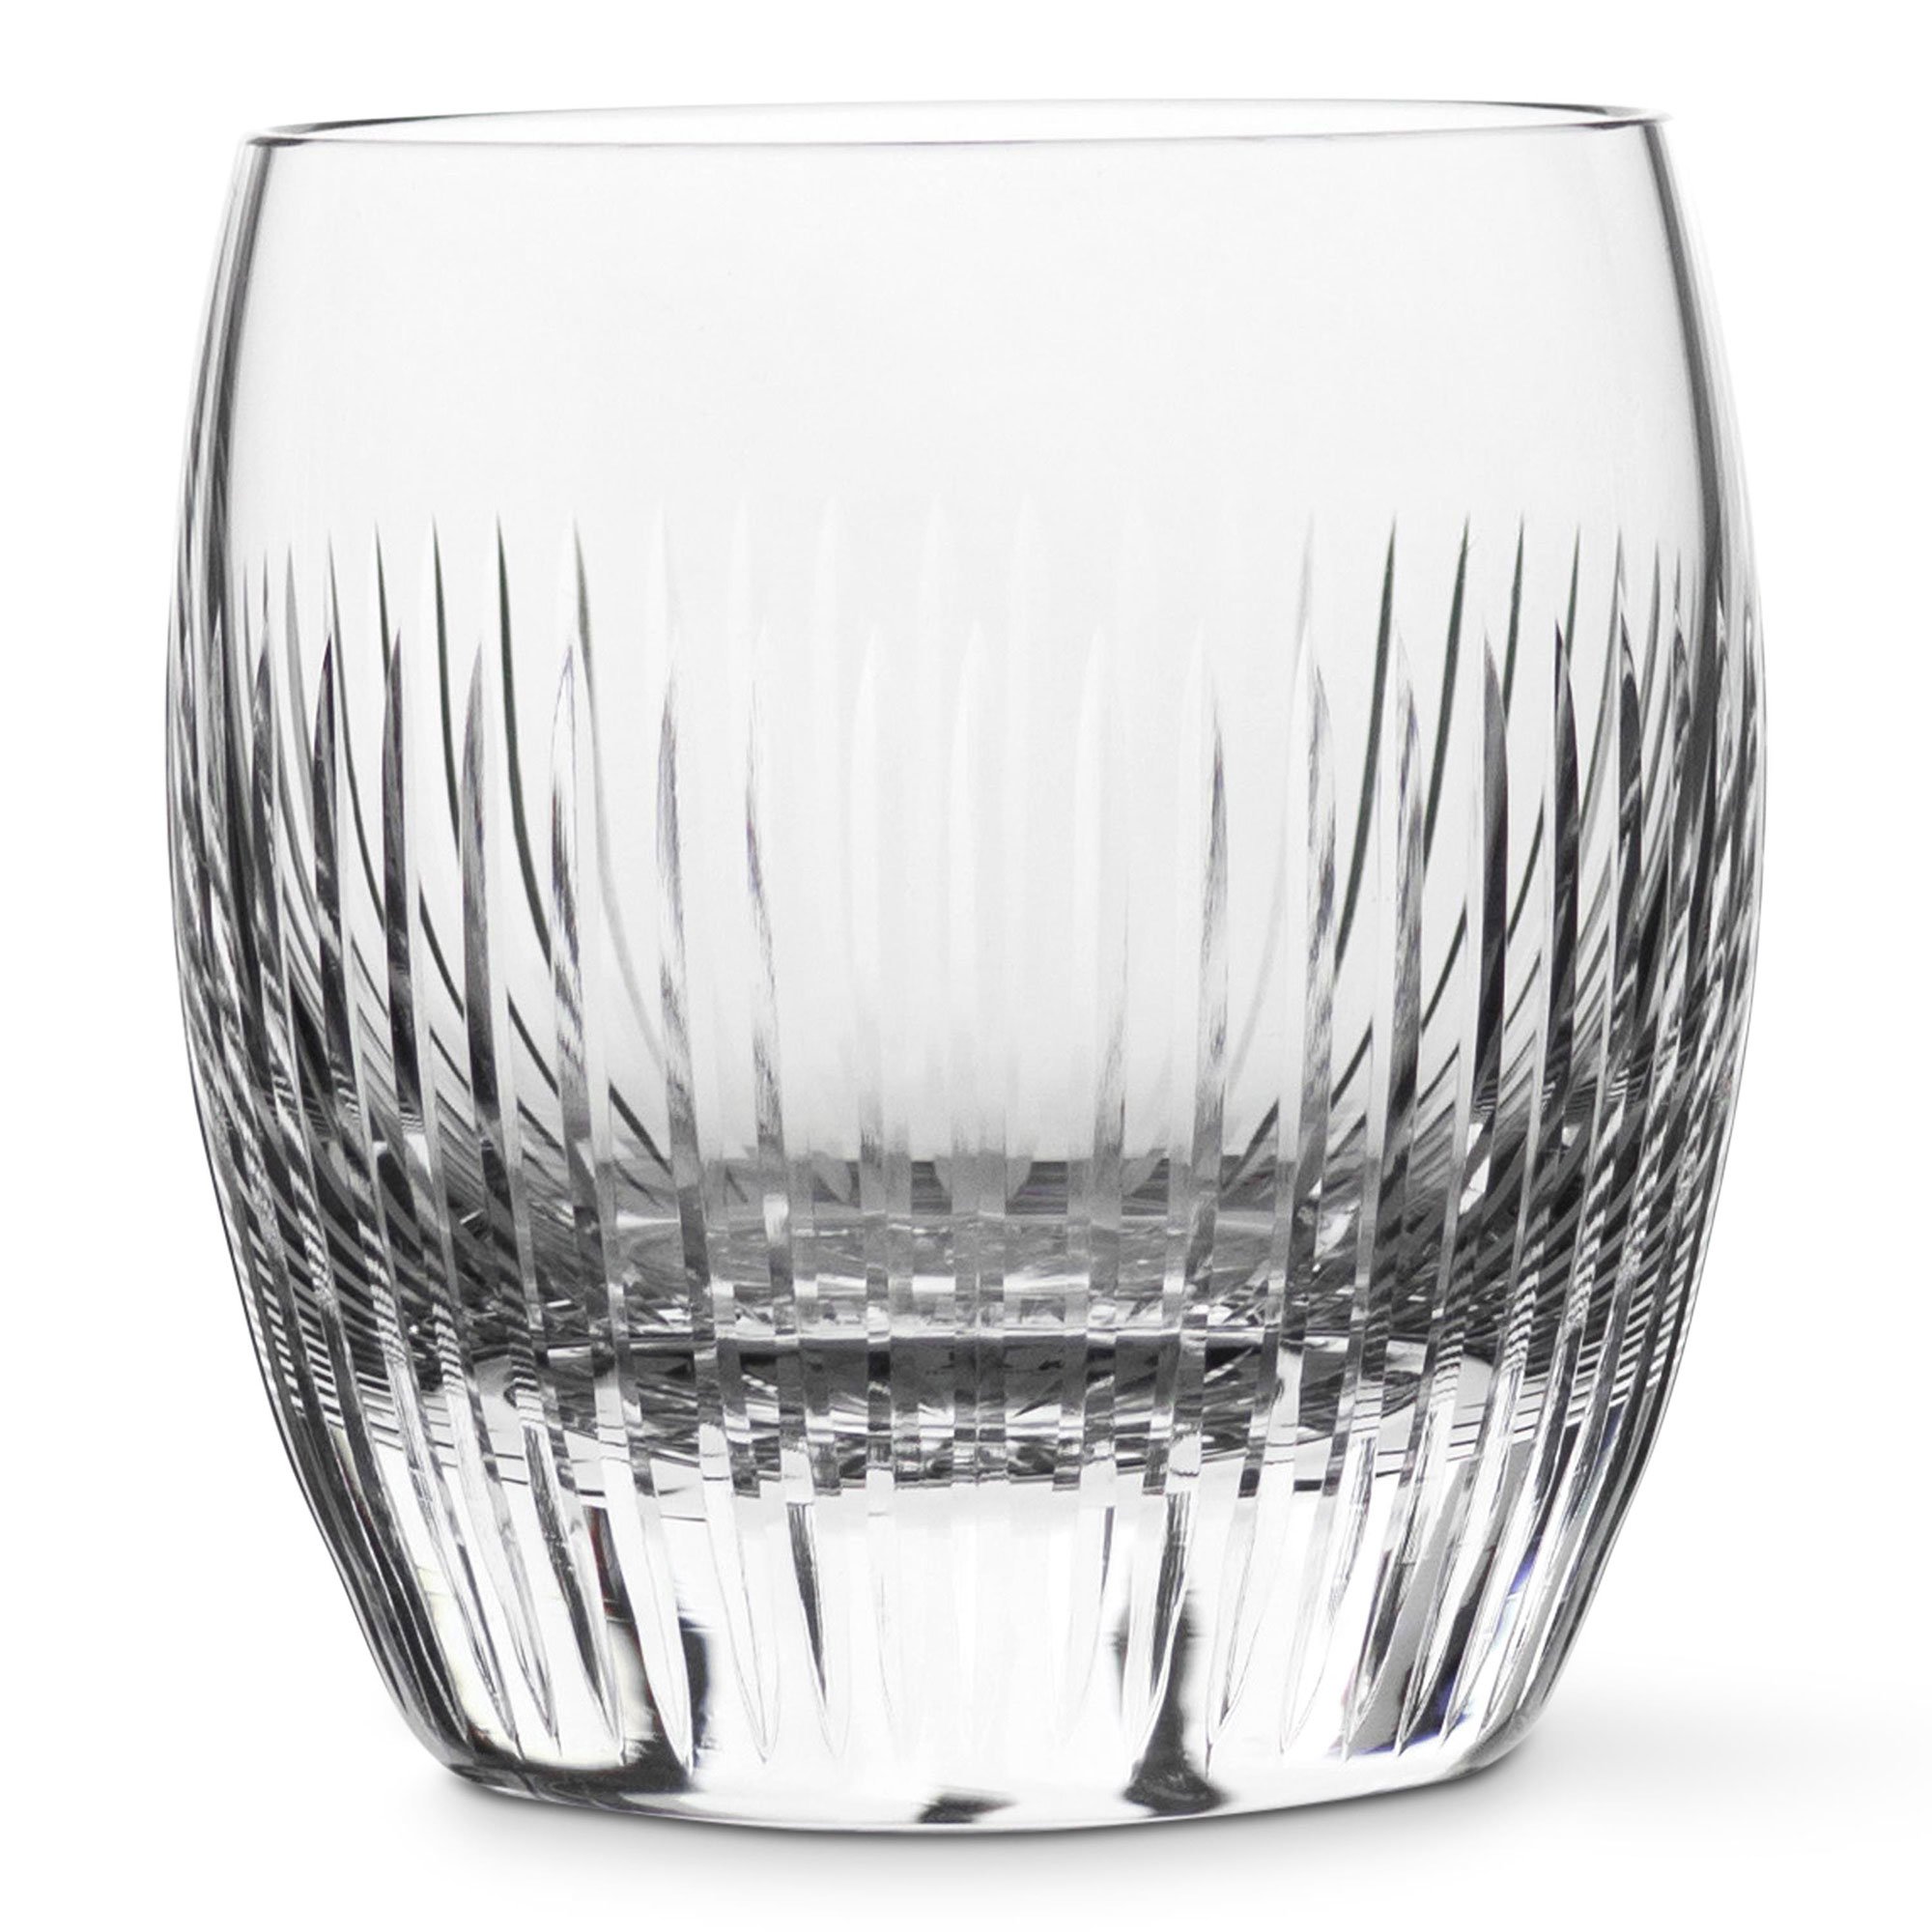 Magnor ALBA Fine Line whiskyglass 30 cl Whiskyglass